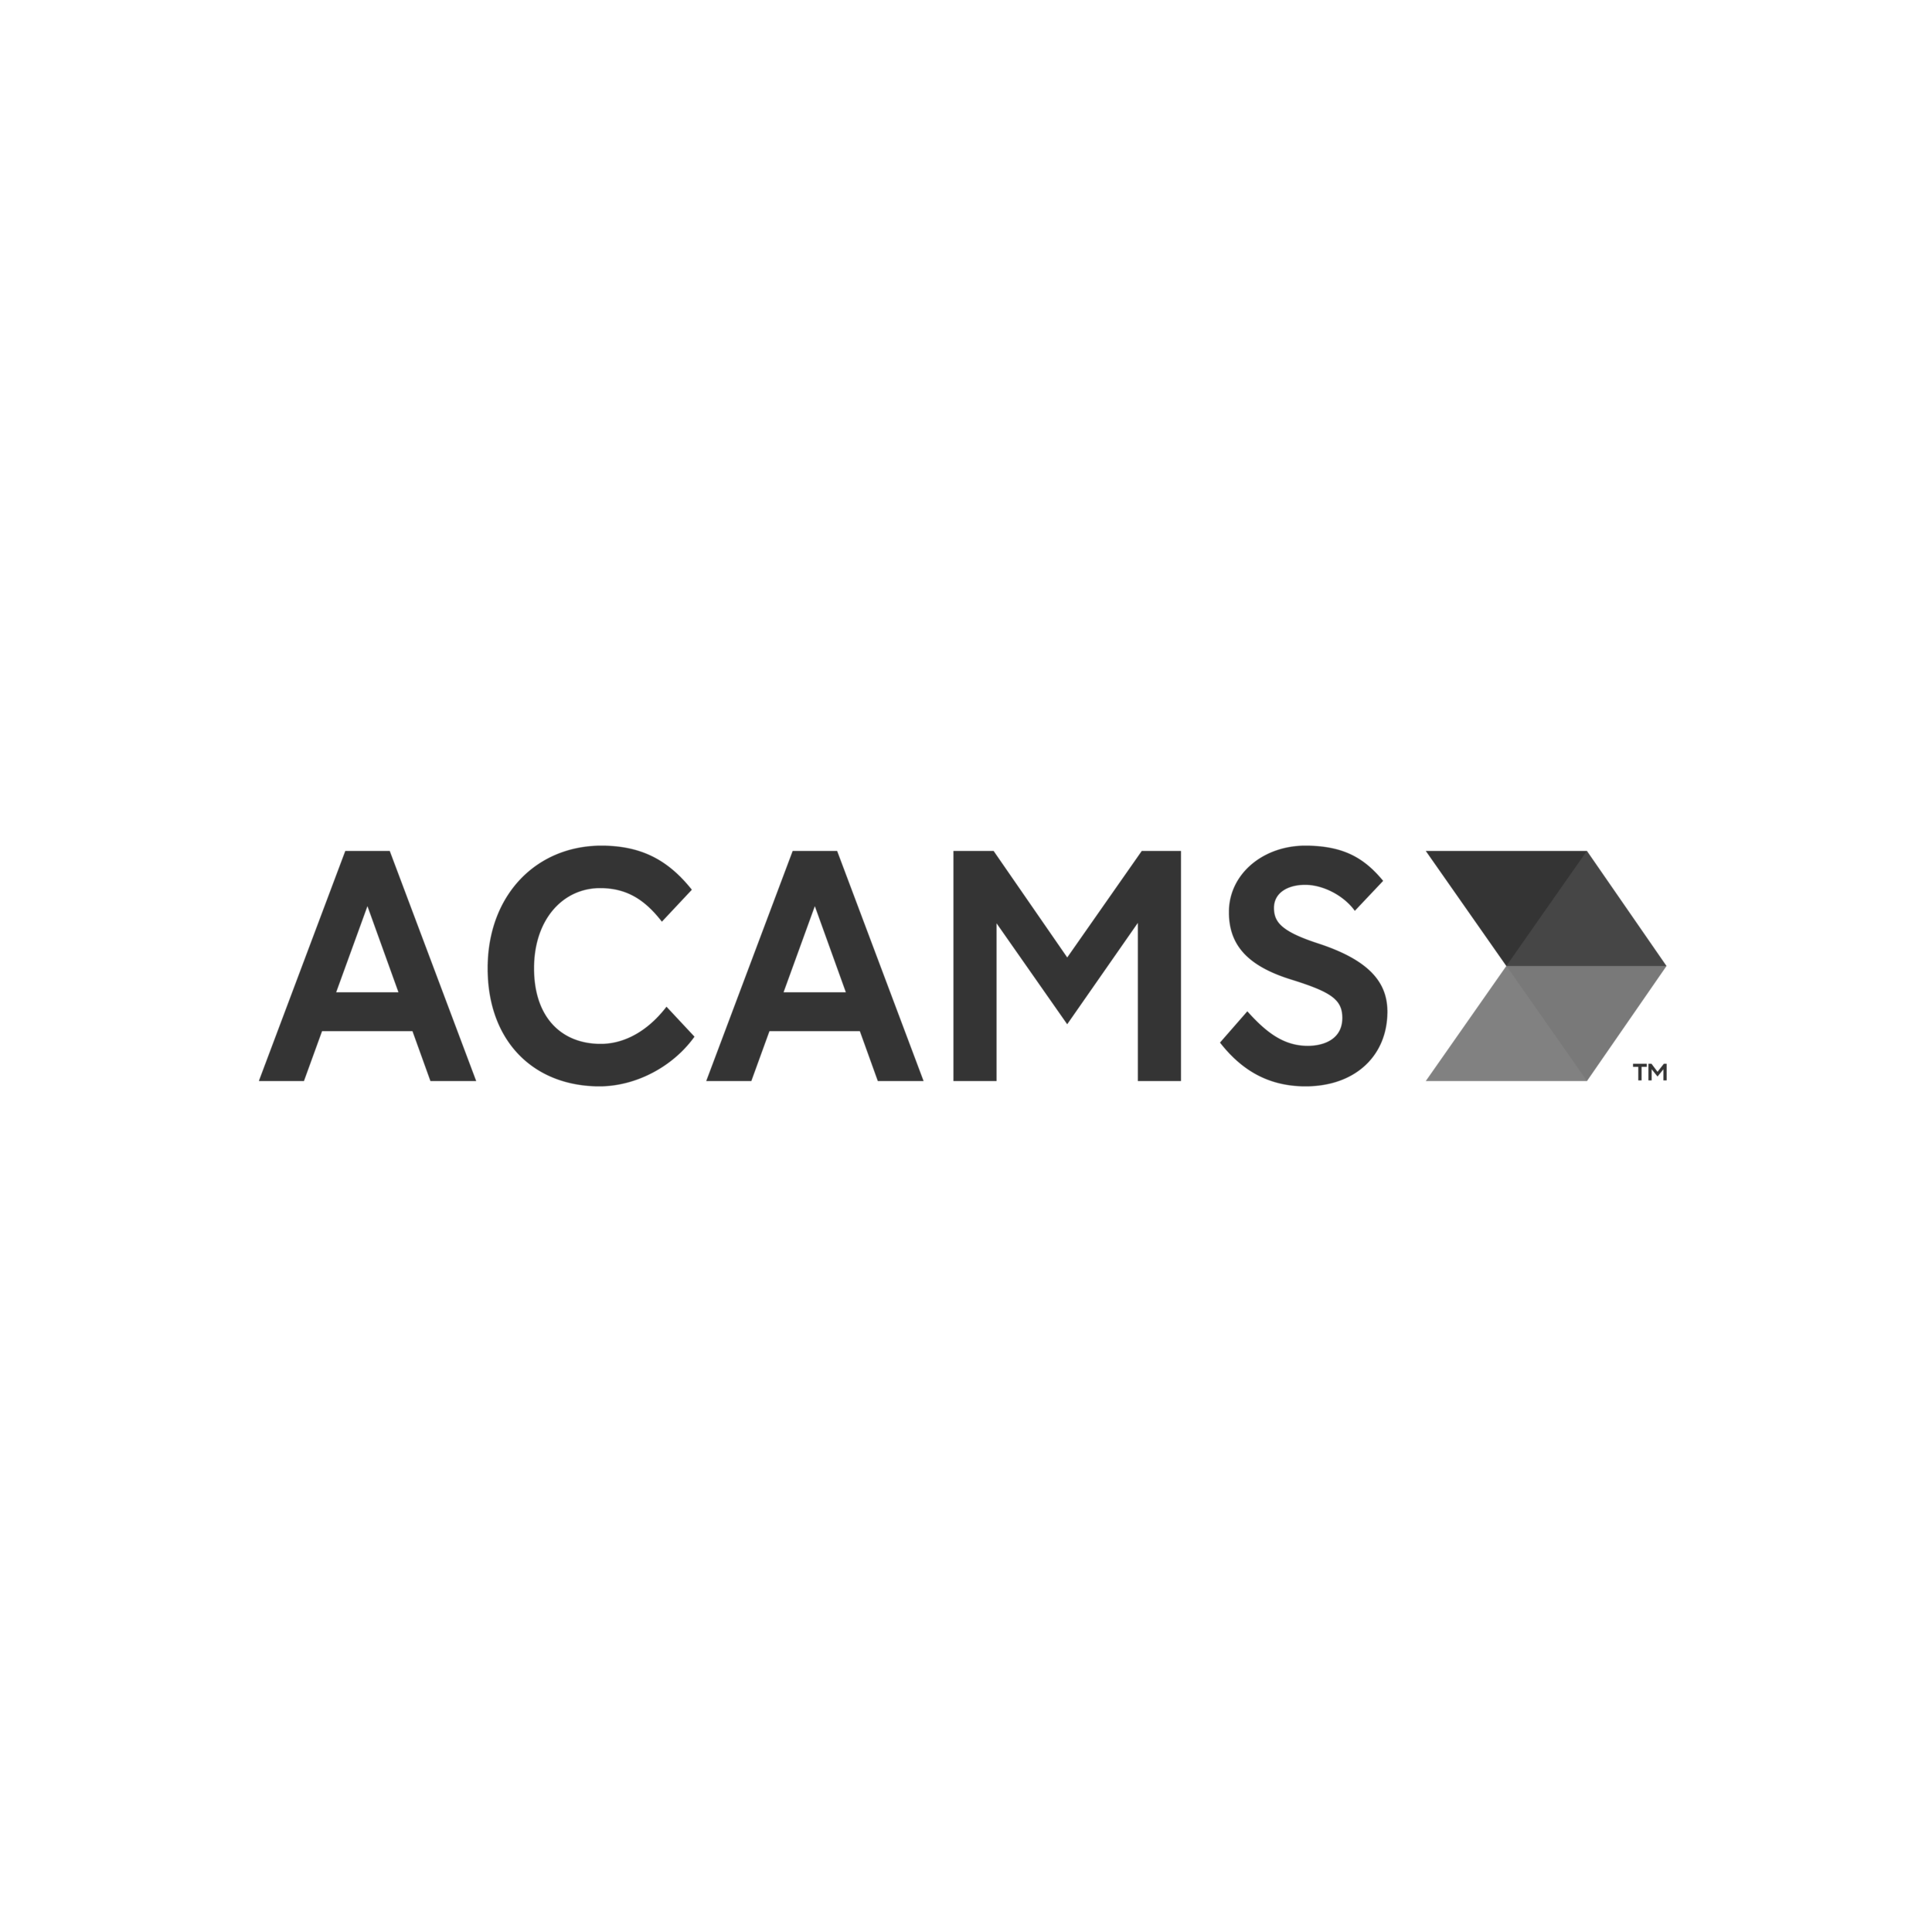 ACAMS Logo_TM_RGB.png